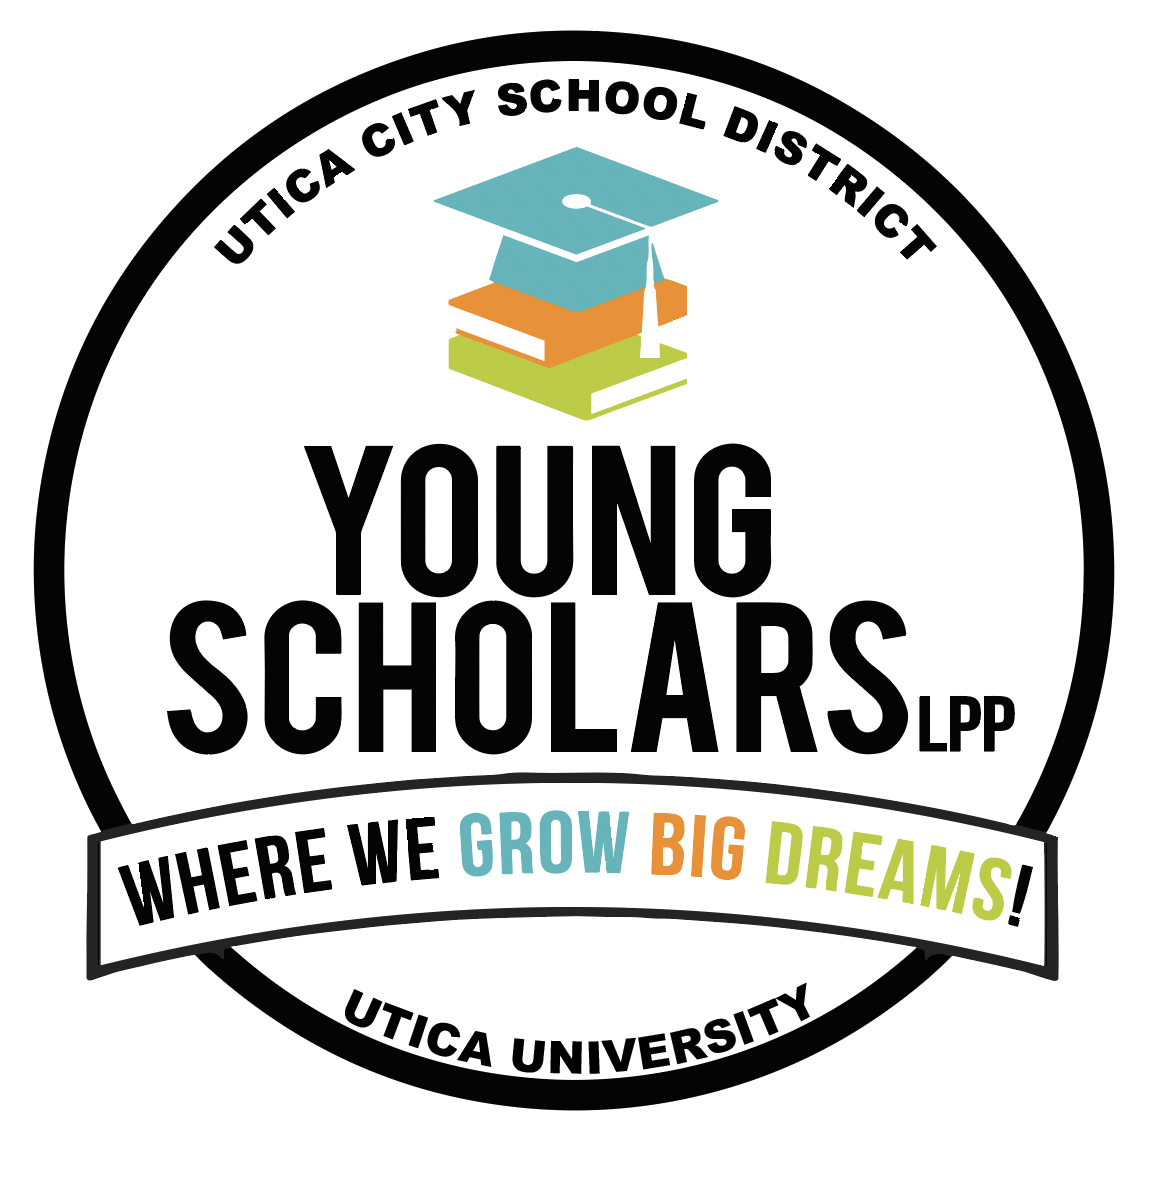 Young Scholars Liberty Partnership Program at Utica University